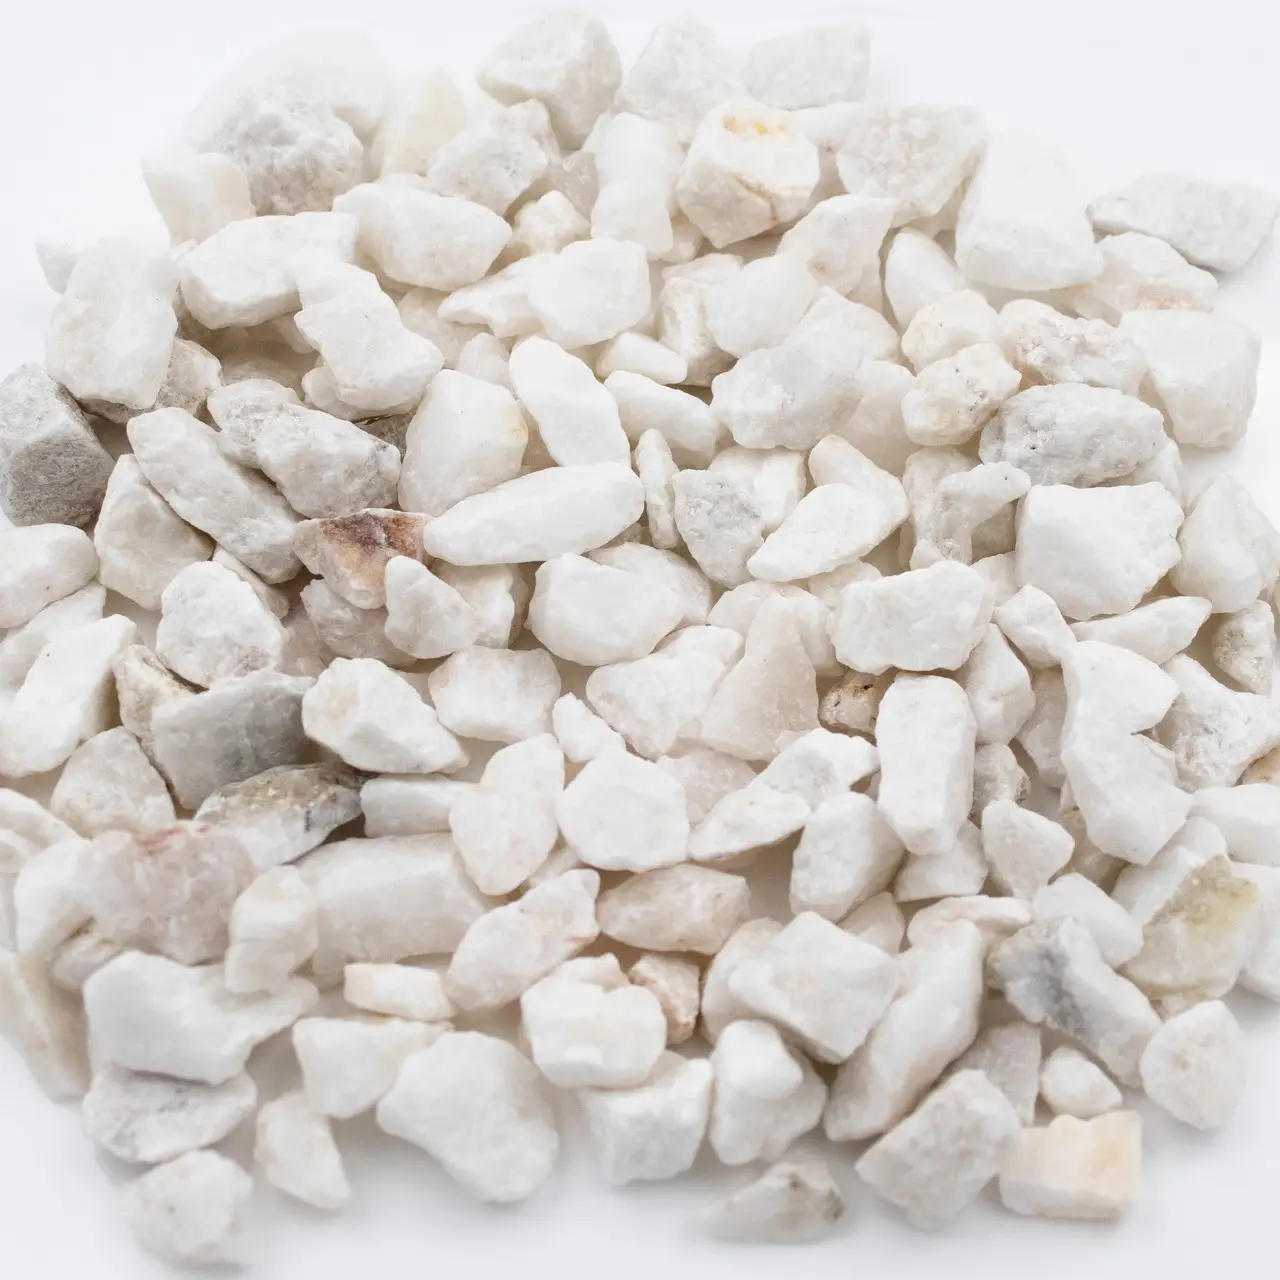 gravel white quartz gardens landscaping landscaping quarry spain premium gravel wholesale supplier natural chips